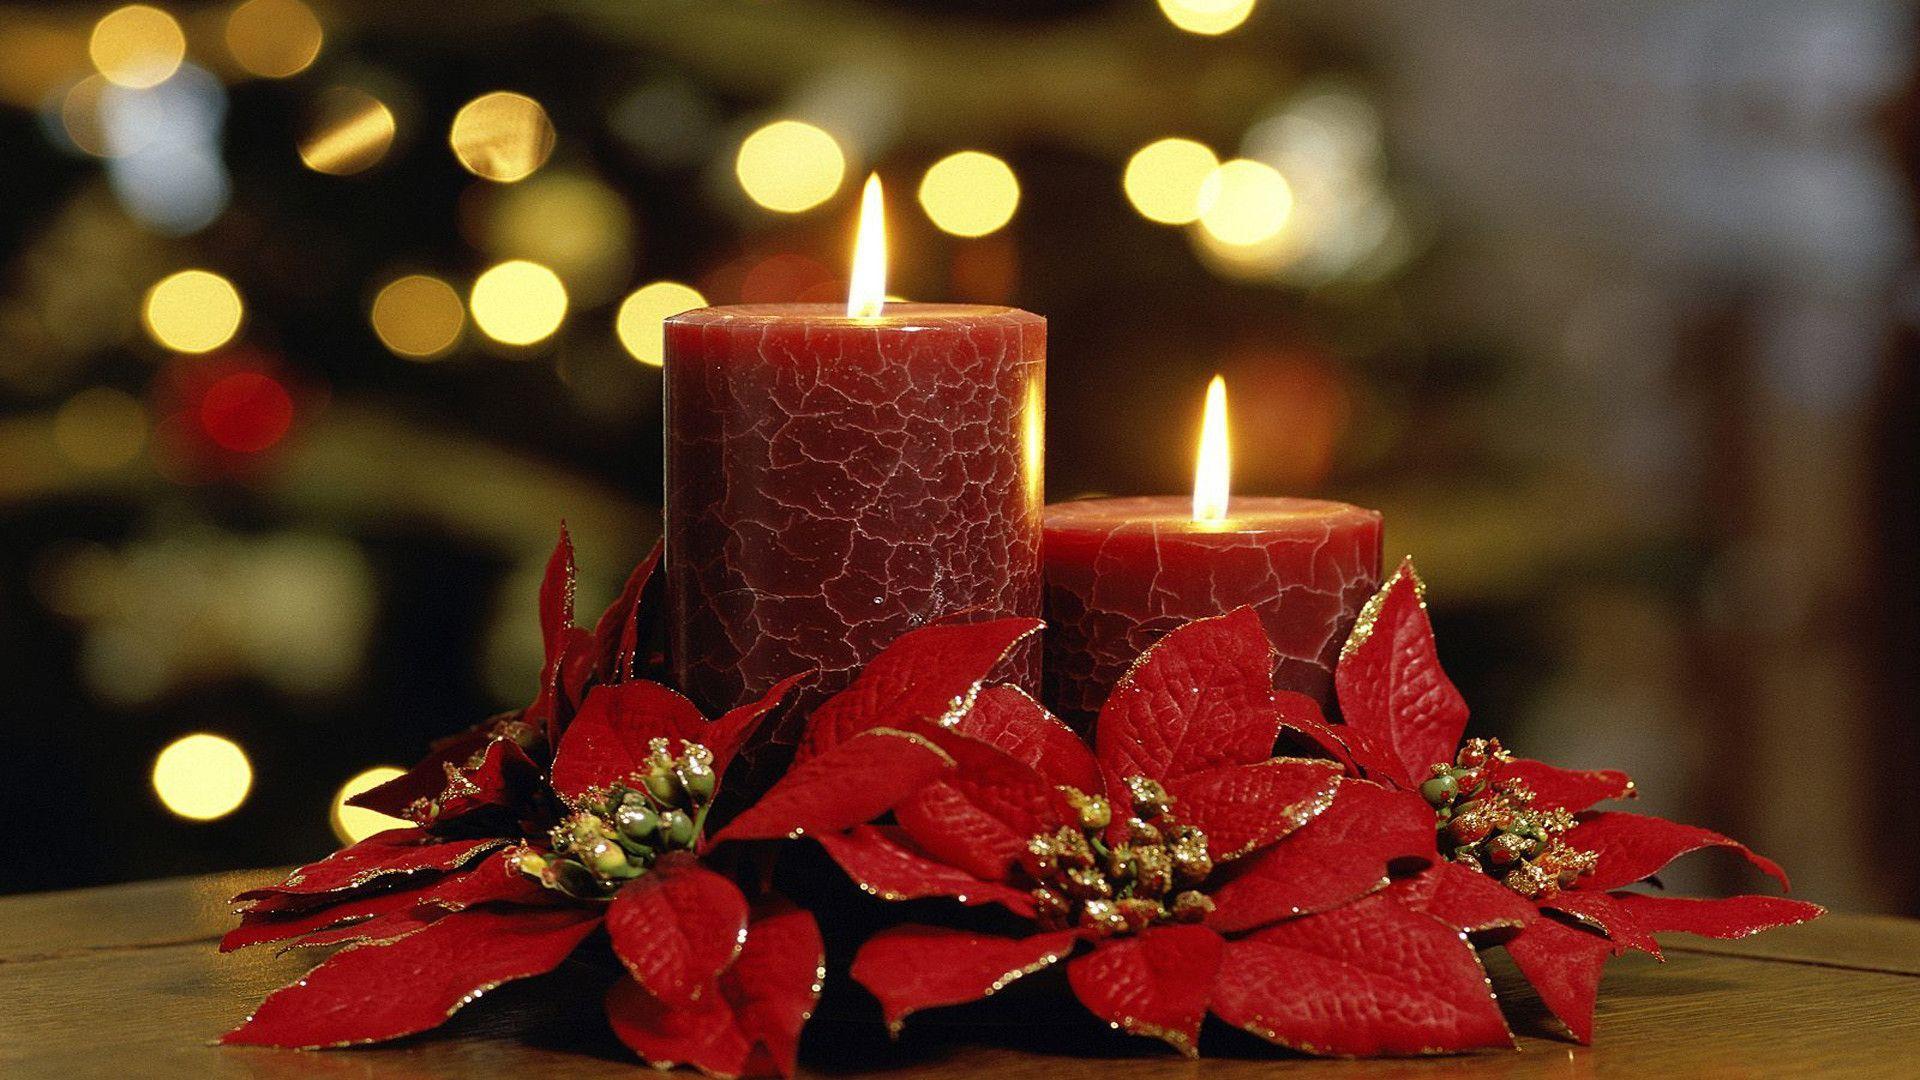 300 Free Poinsettia  Christmas Images  Pixabay